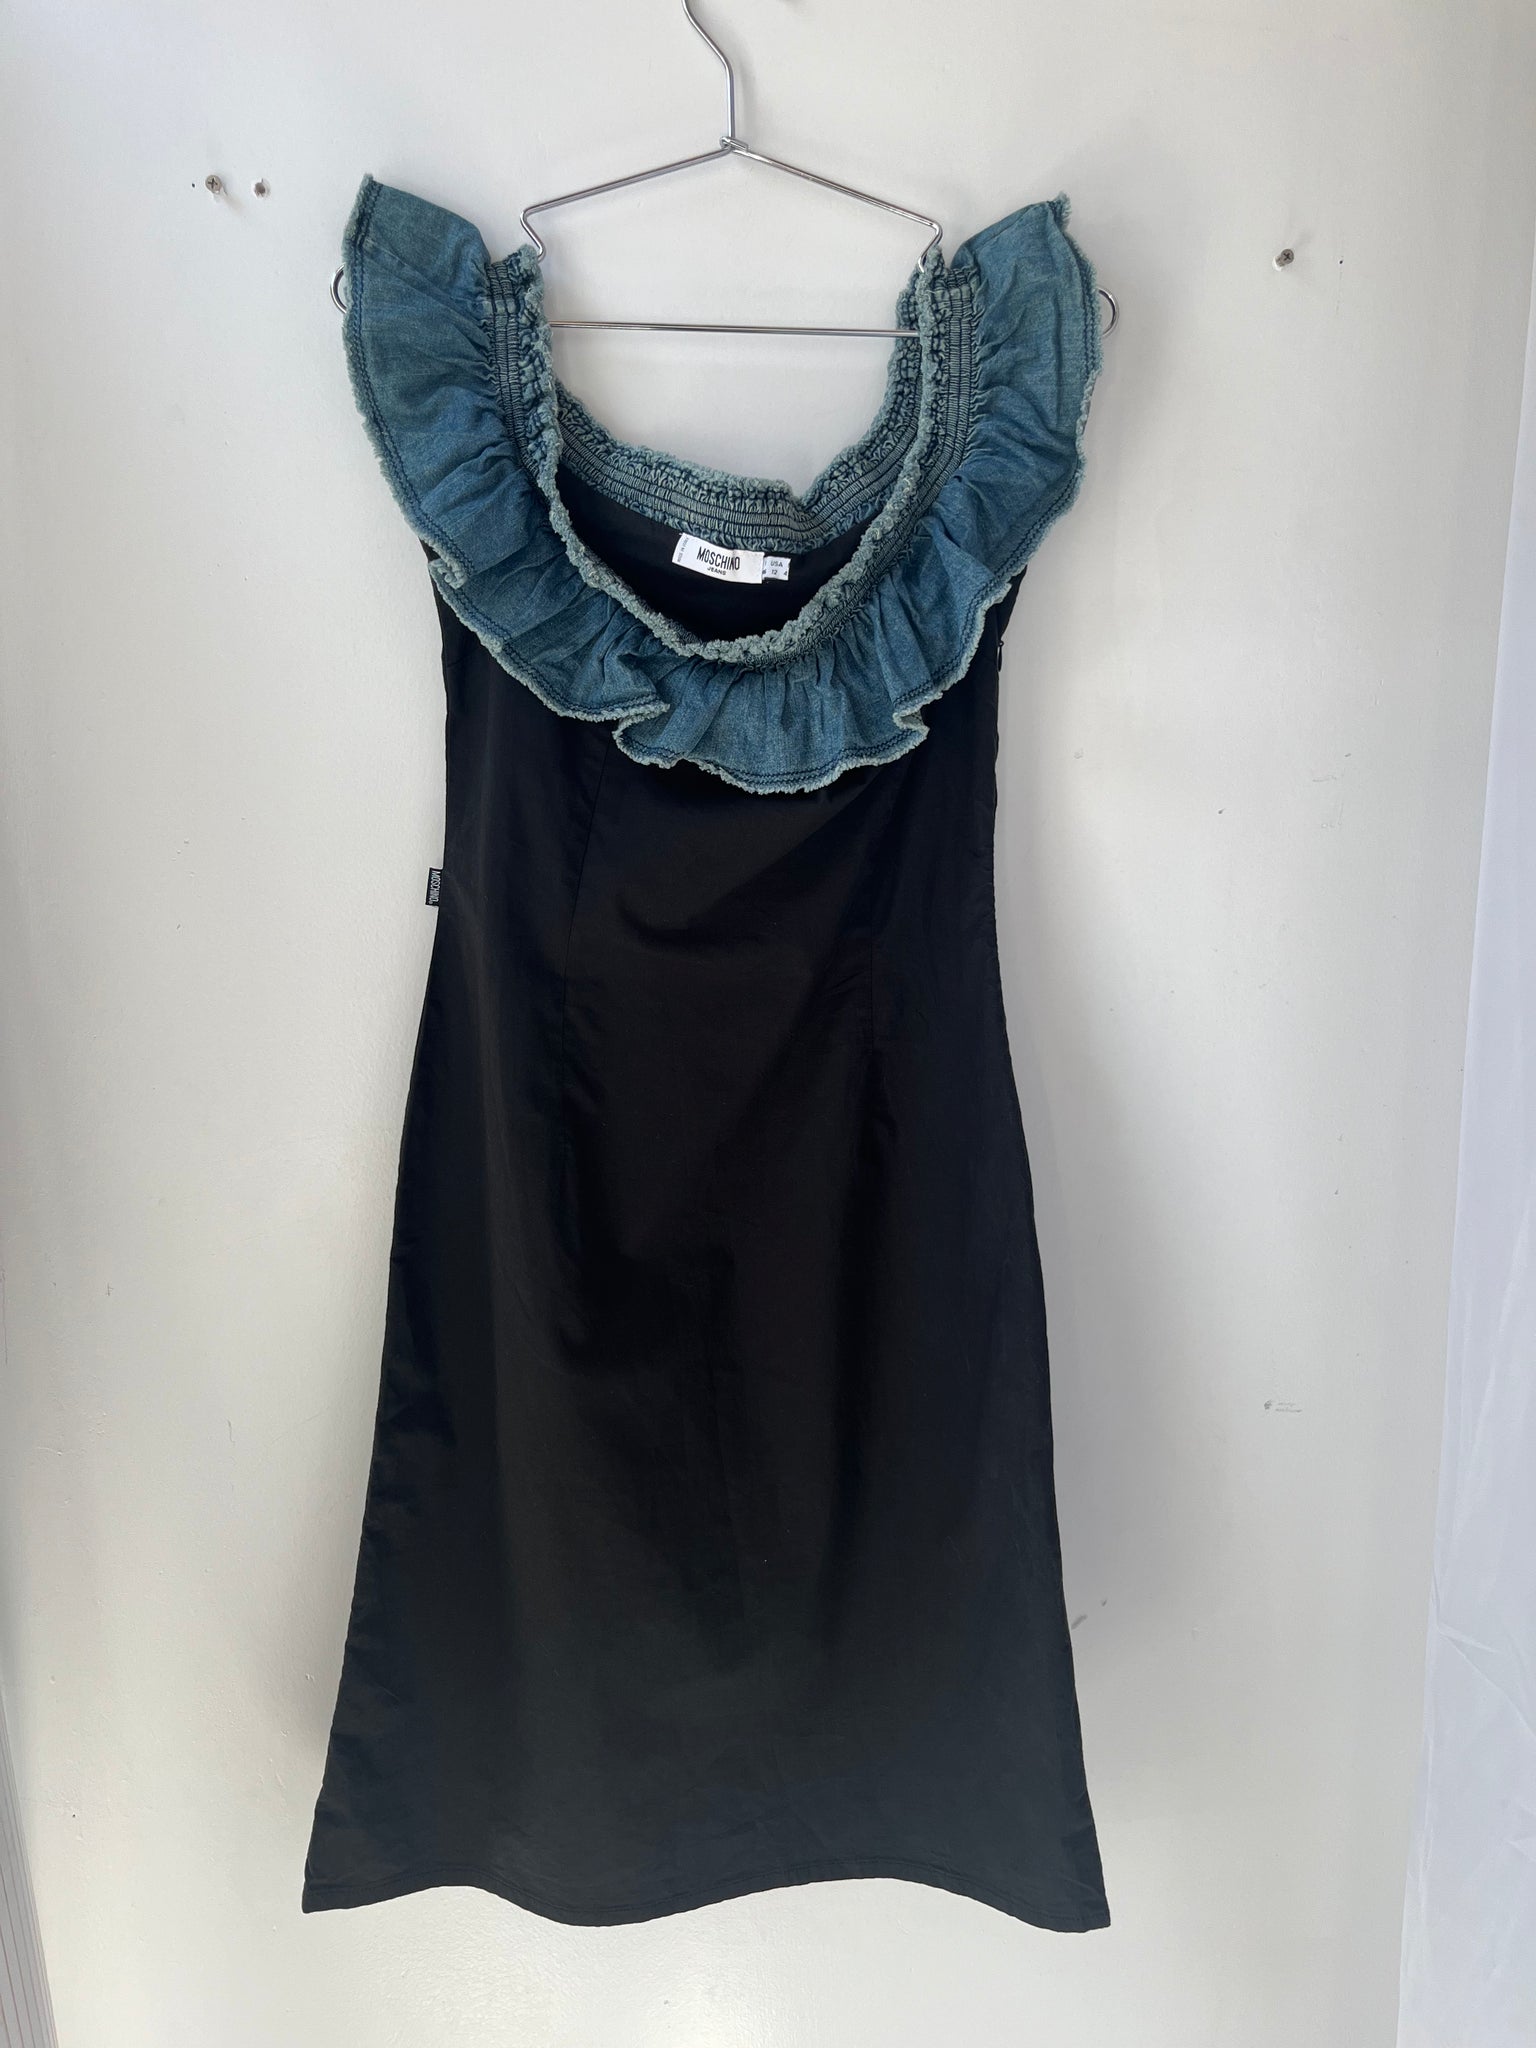 Moschino cotton & denim dress